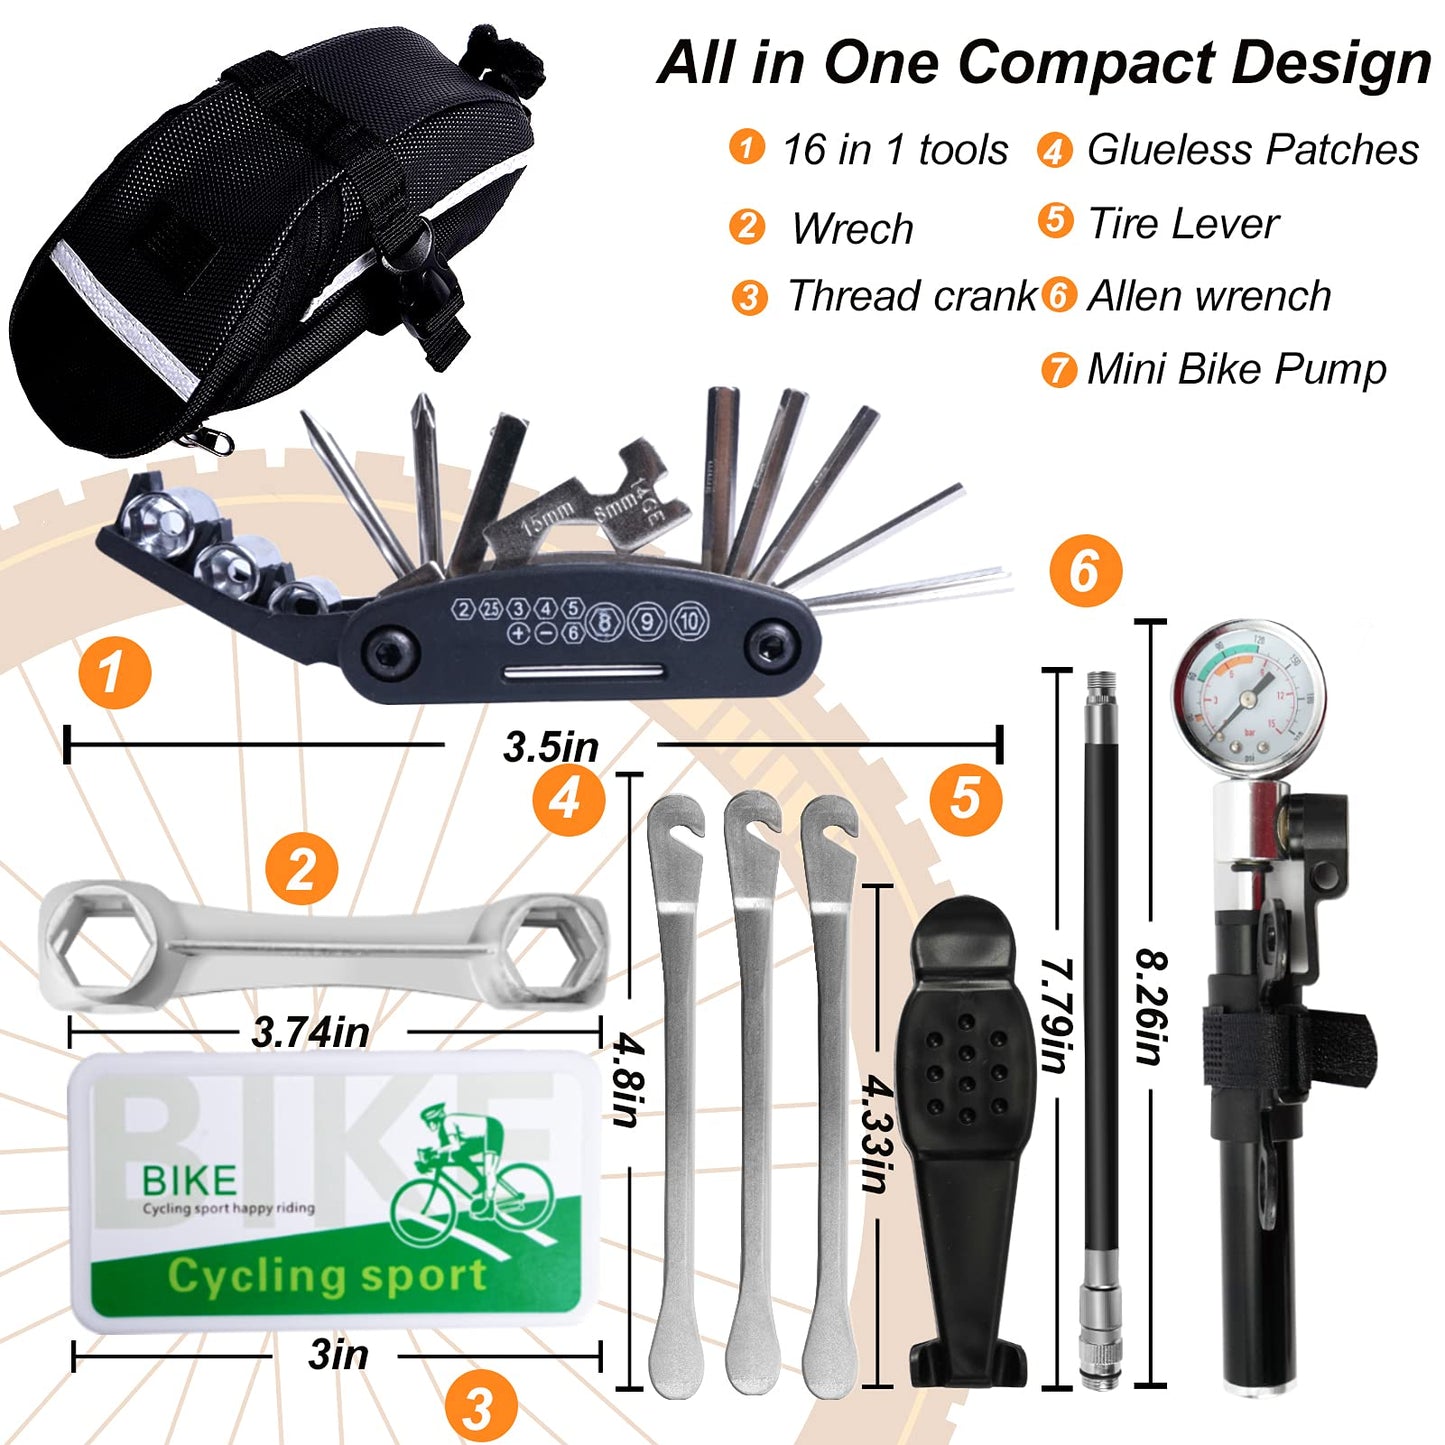 ORCISH 45PCS Bike Repair Kits,Bike Tire Repair Kit,Bicycle Tool kit with 210 Psi Mini Pump,16 IN 1 Multi-Function Tools,Bicycle emergency accessories with bag.